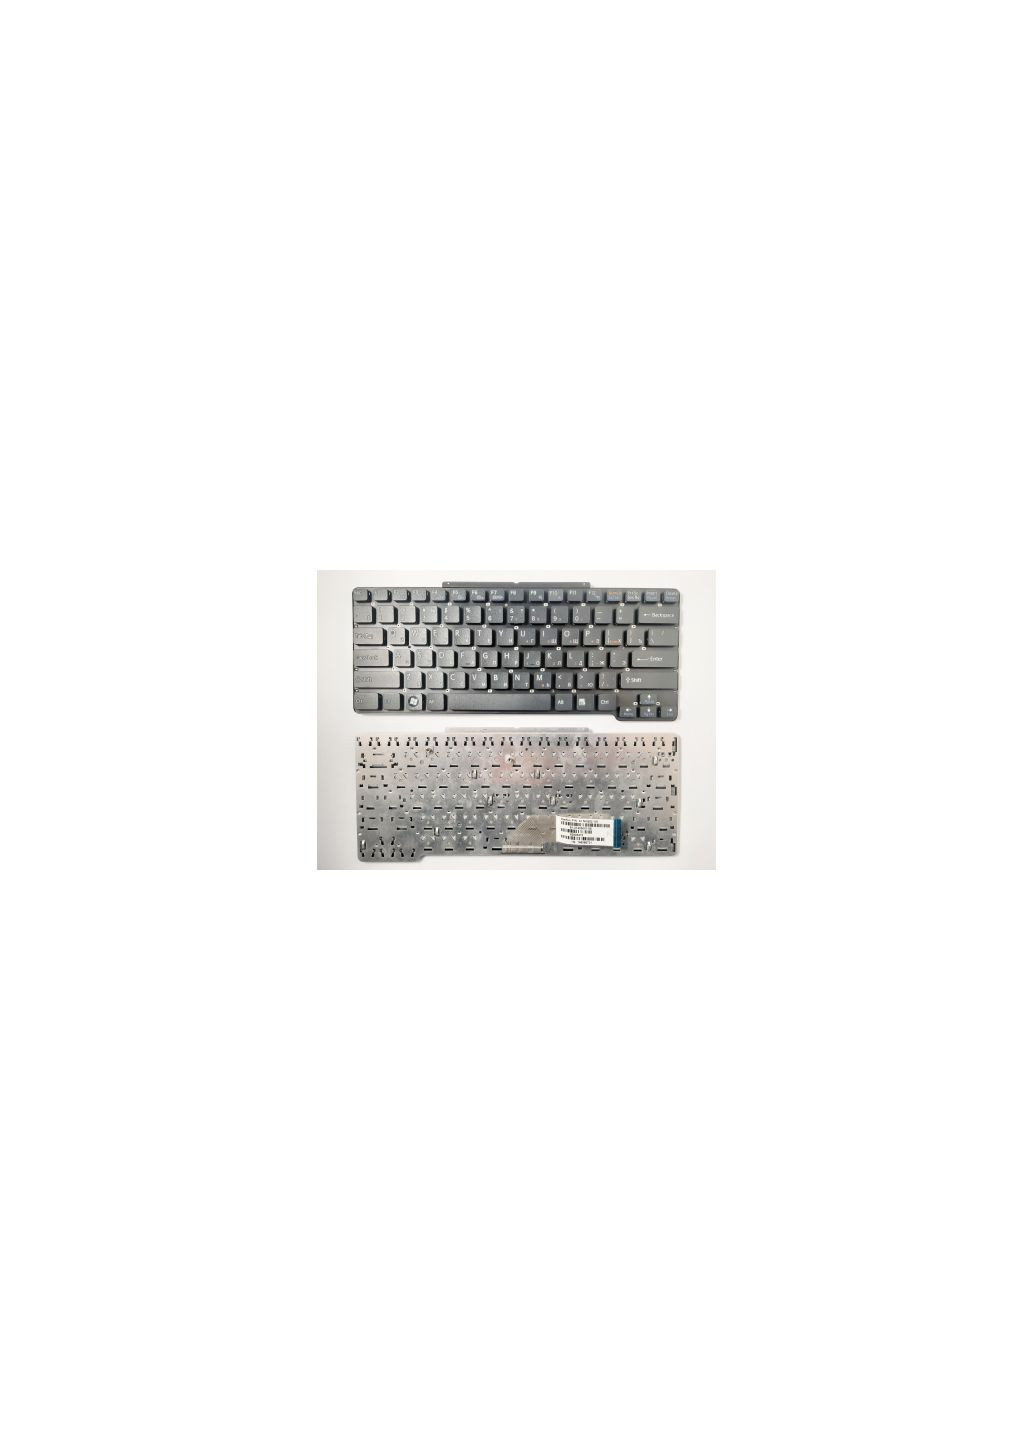 Клавиатура ноутбука VGNSR series черная без рамки UA (A43212) Sony vgn-sr series черная без рамки ua (276707398)